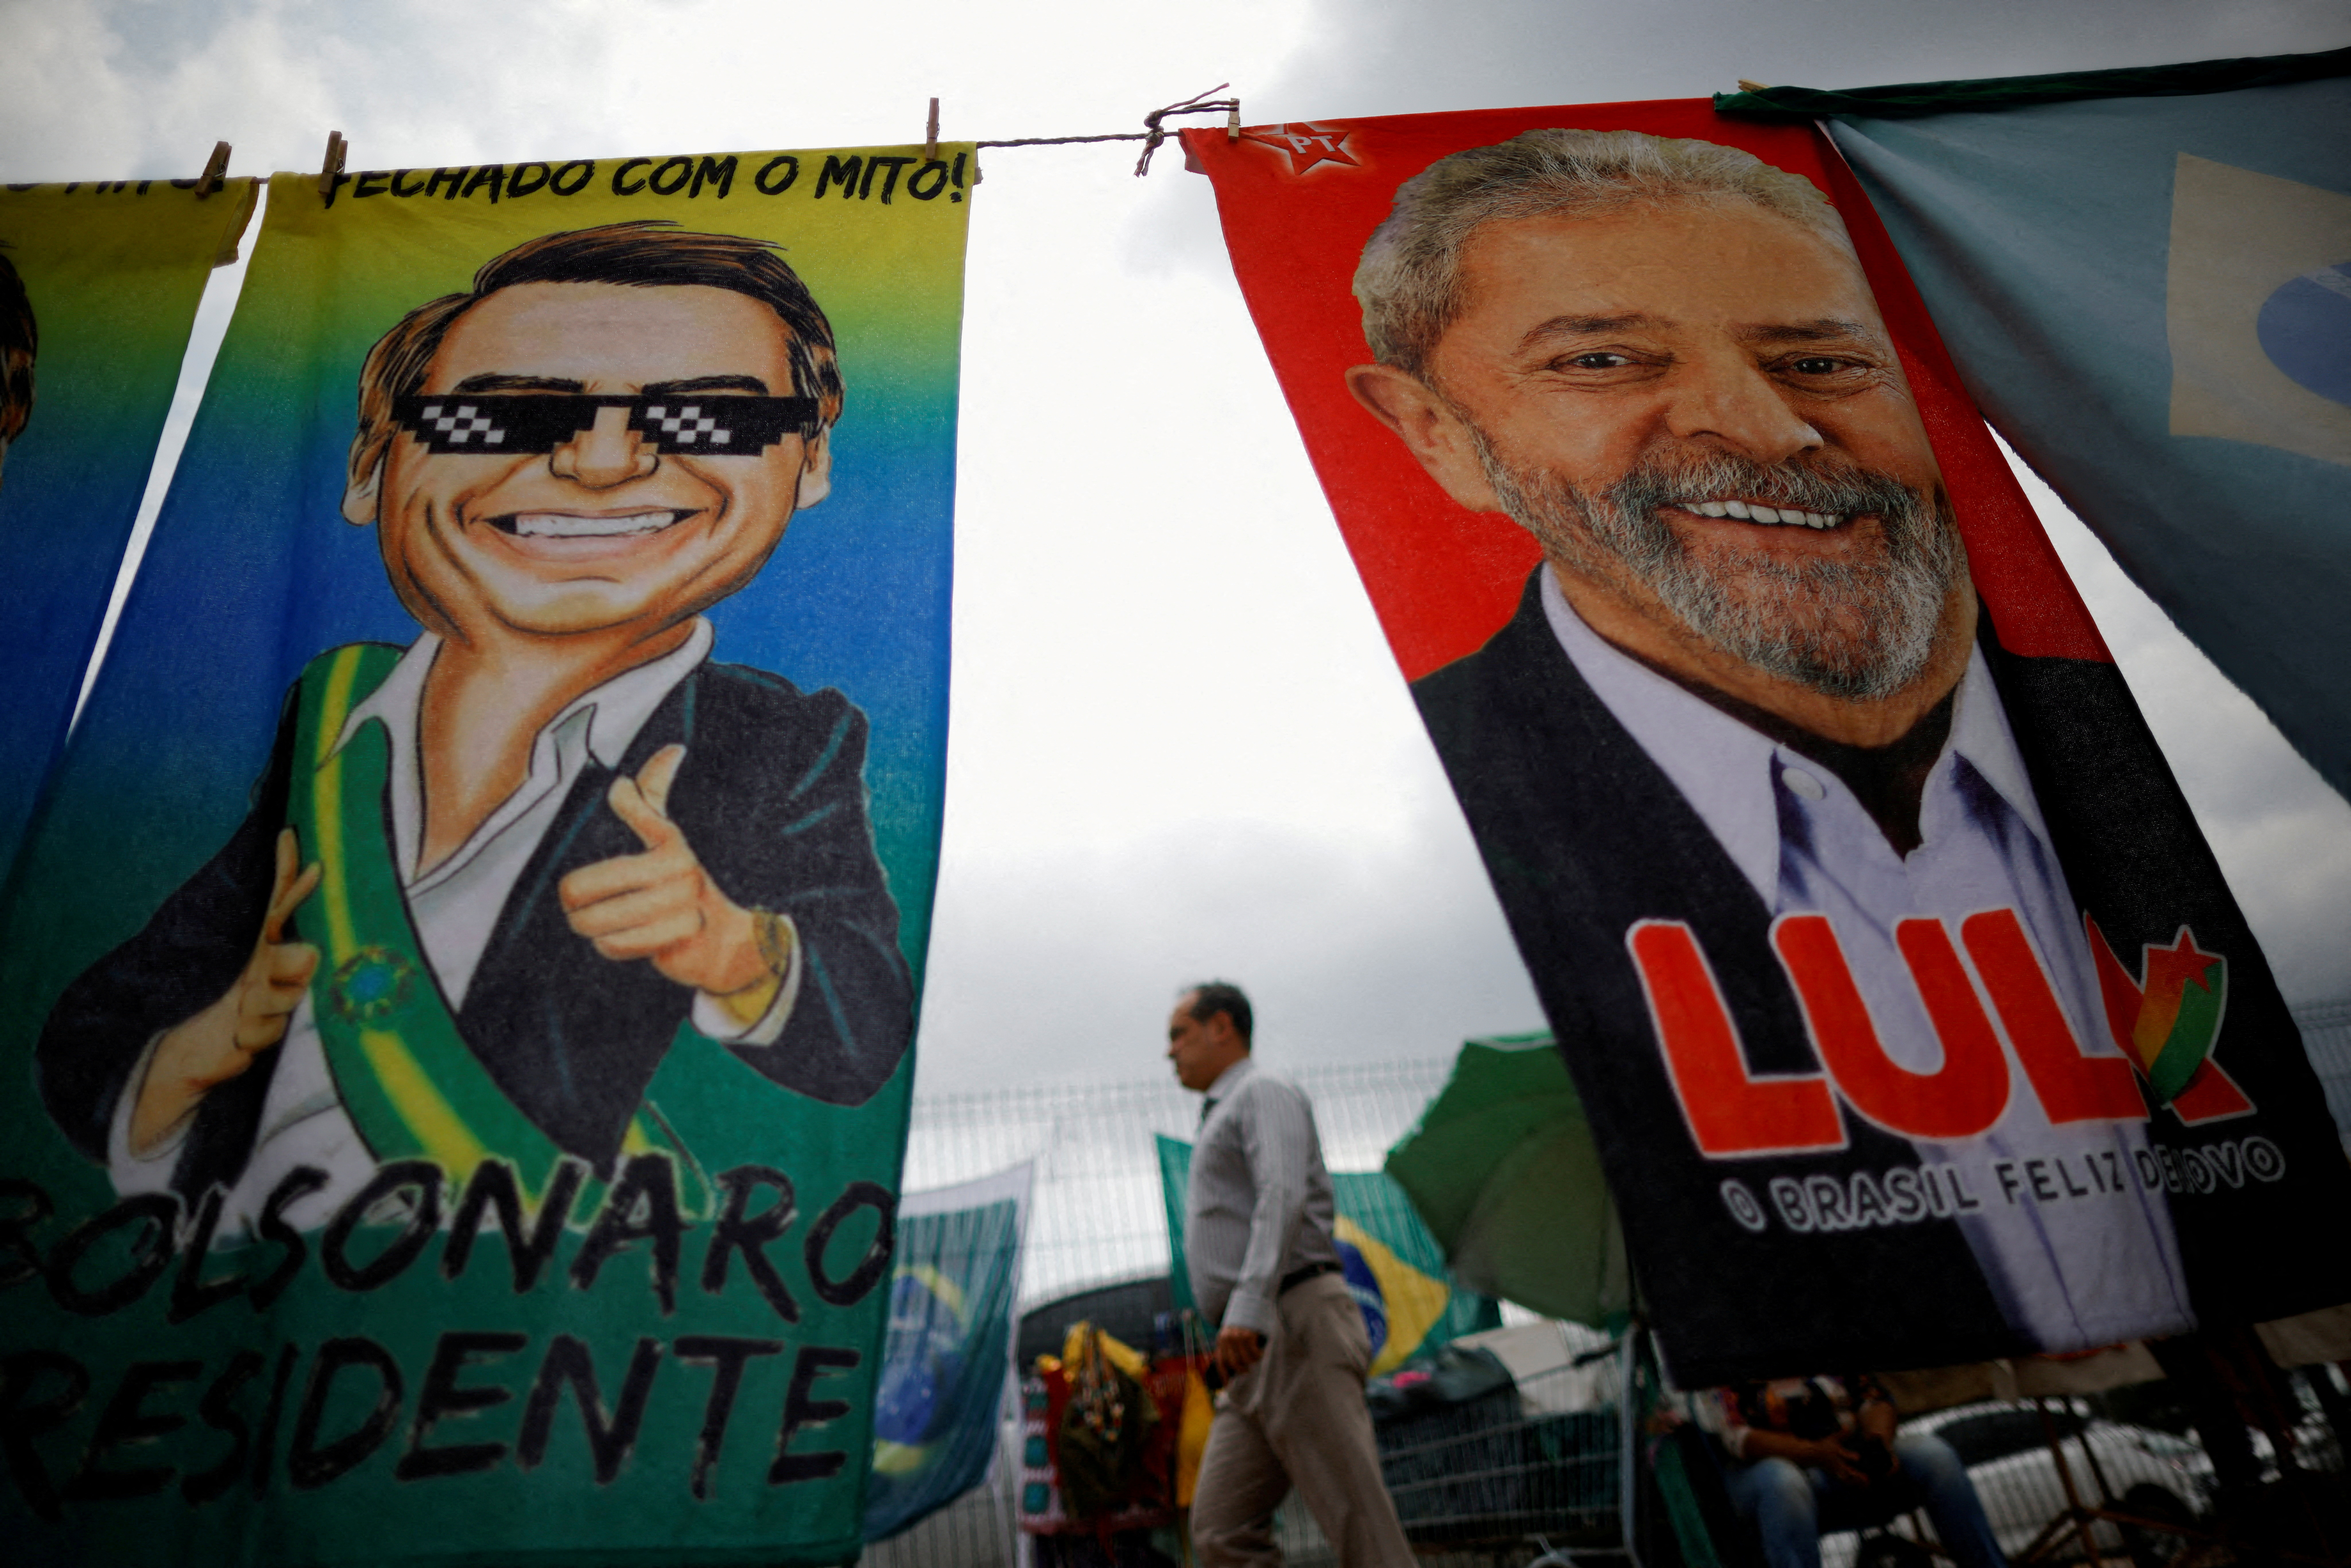 FILE PHOTO: A man walks past election campaign flags depicting former President Lula da Silva and current President Jair Bolsonaro in Brasilia (REUTERS/Adriano Machado)